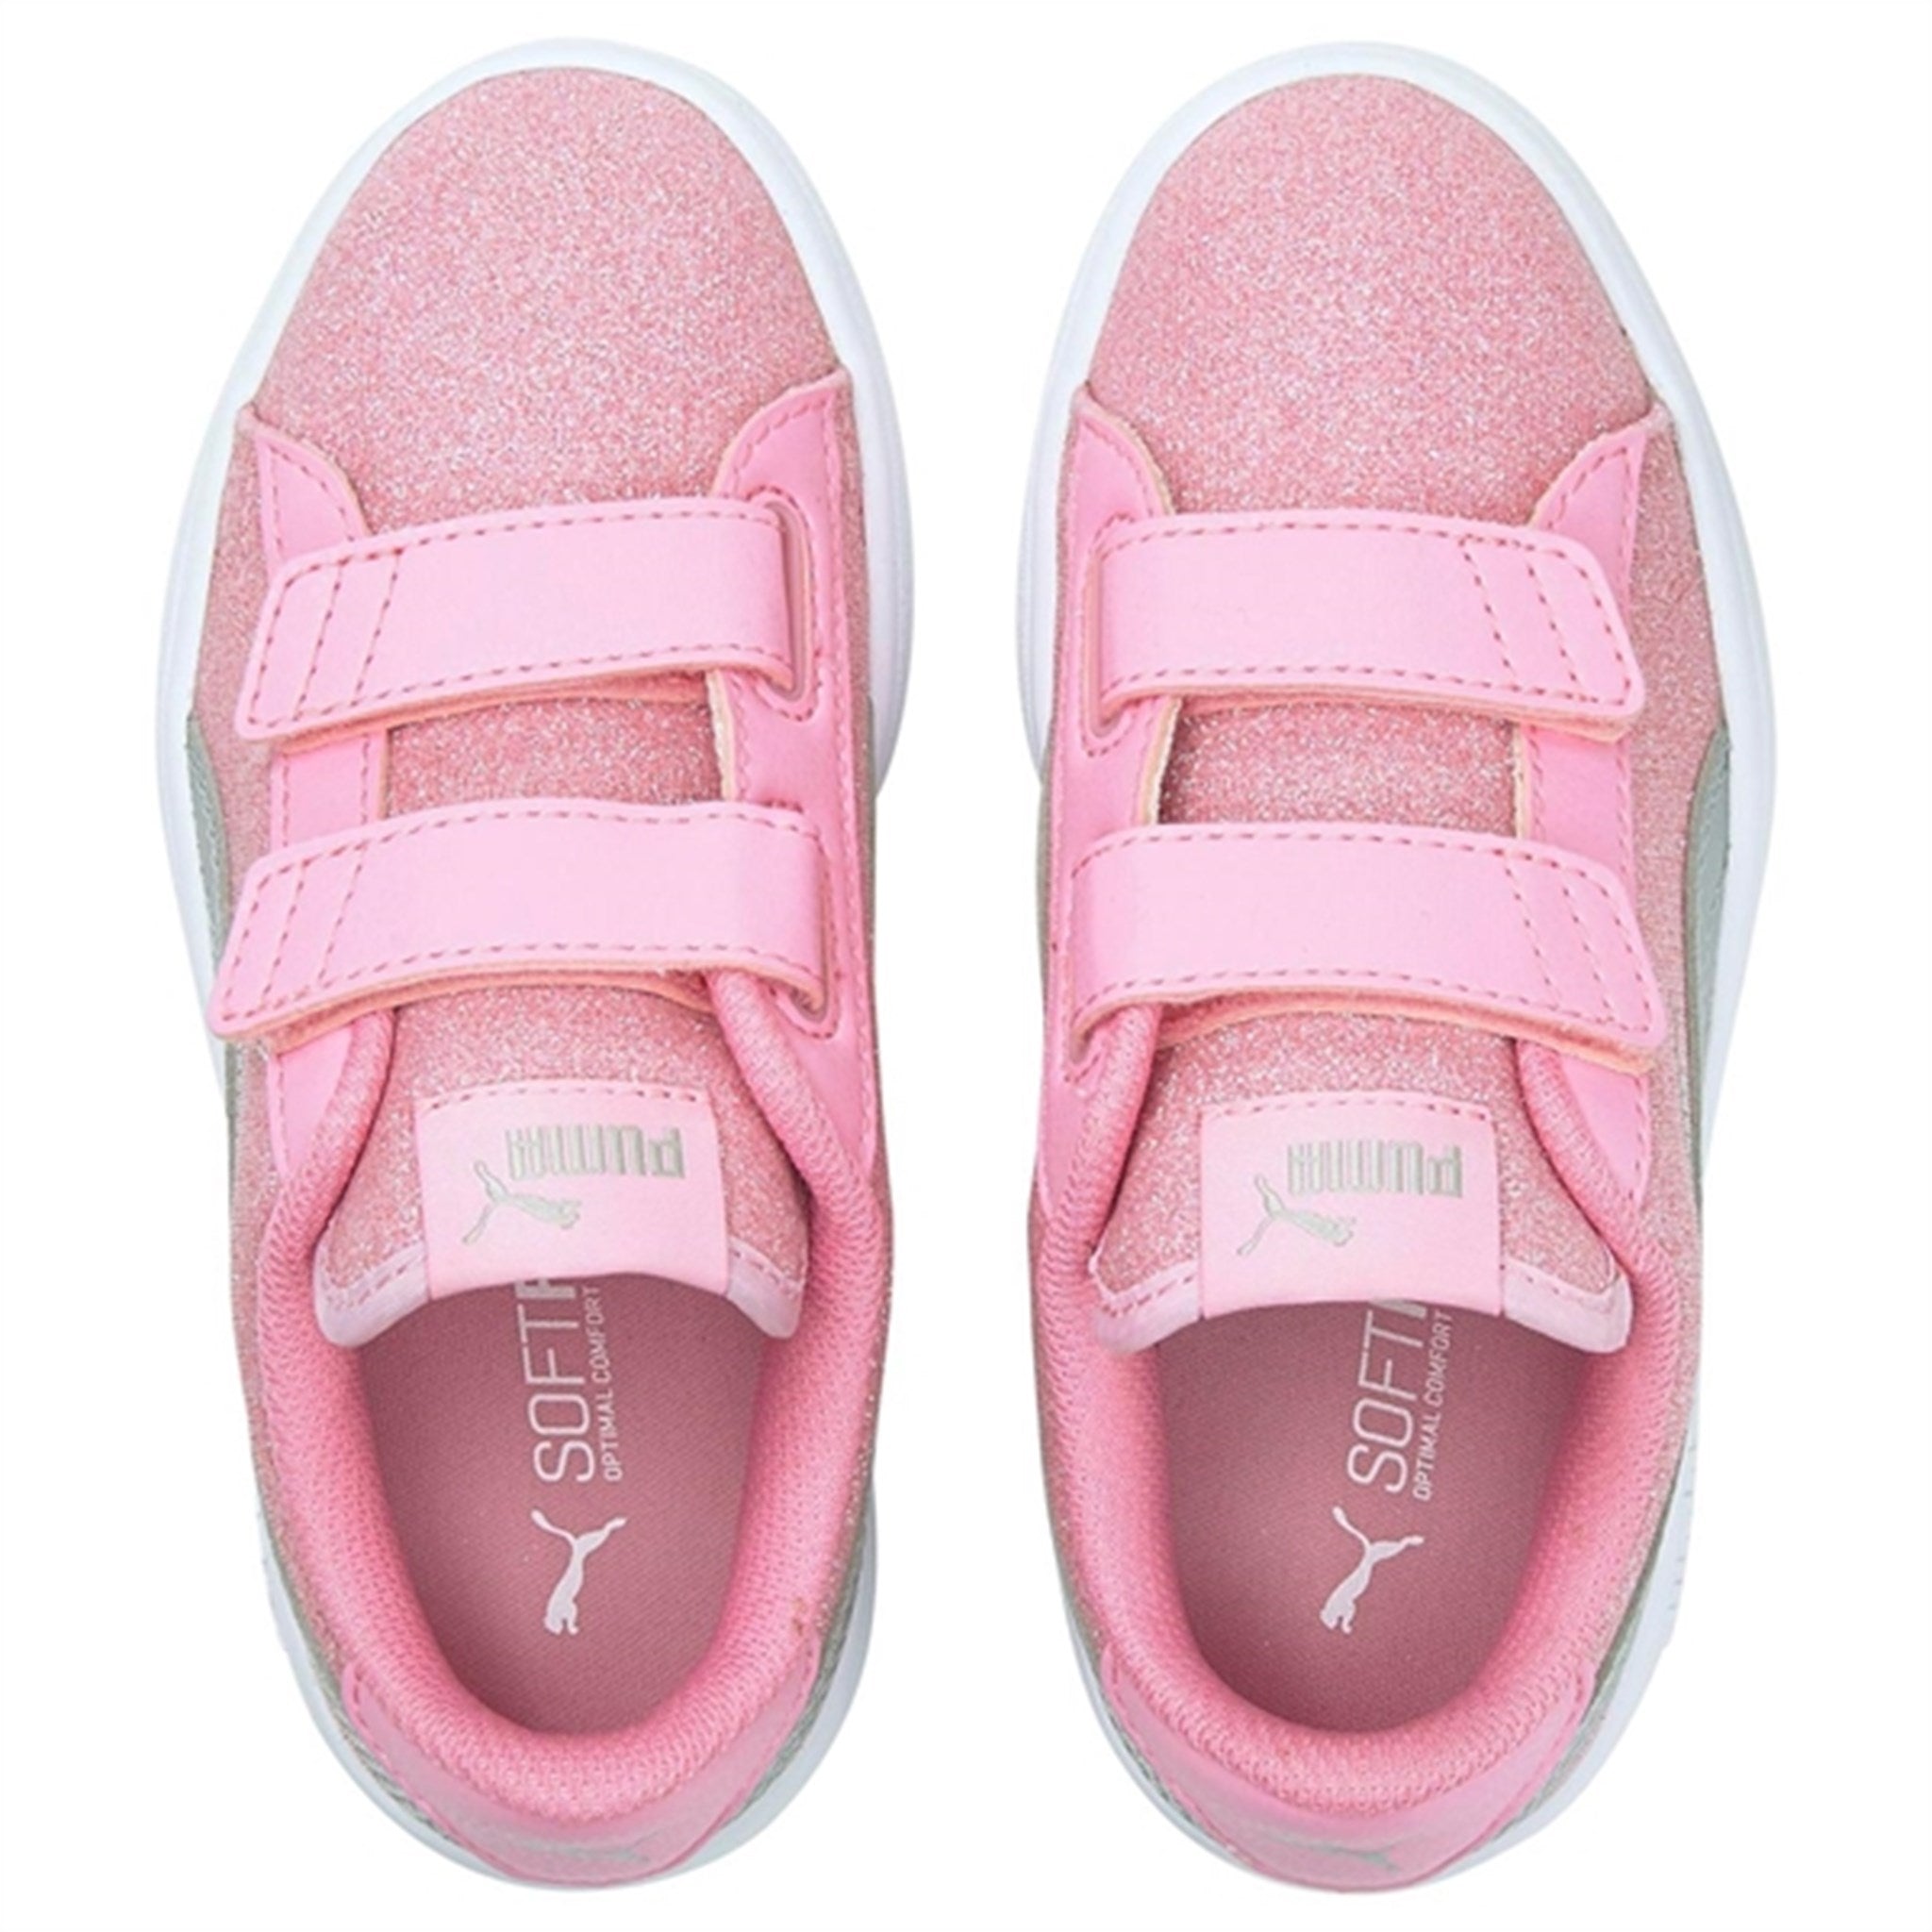 Puma Smash v2 Glitz Glam V PS Sneakers Prism Pink-Silver 4